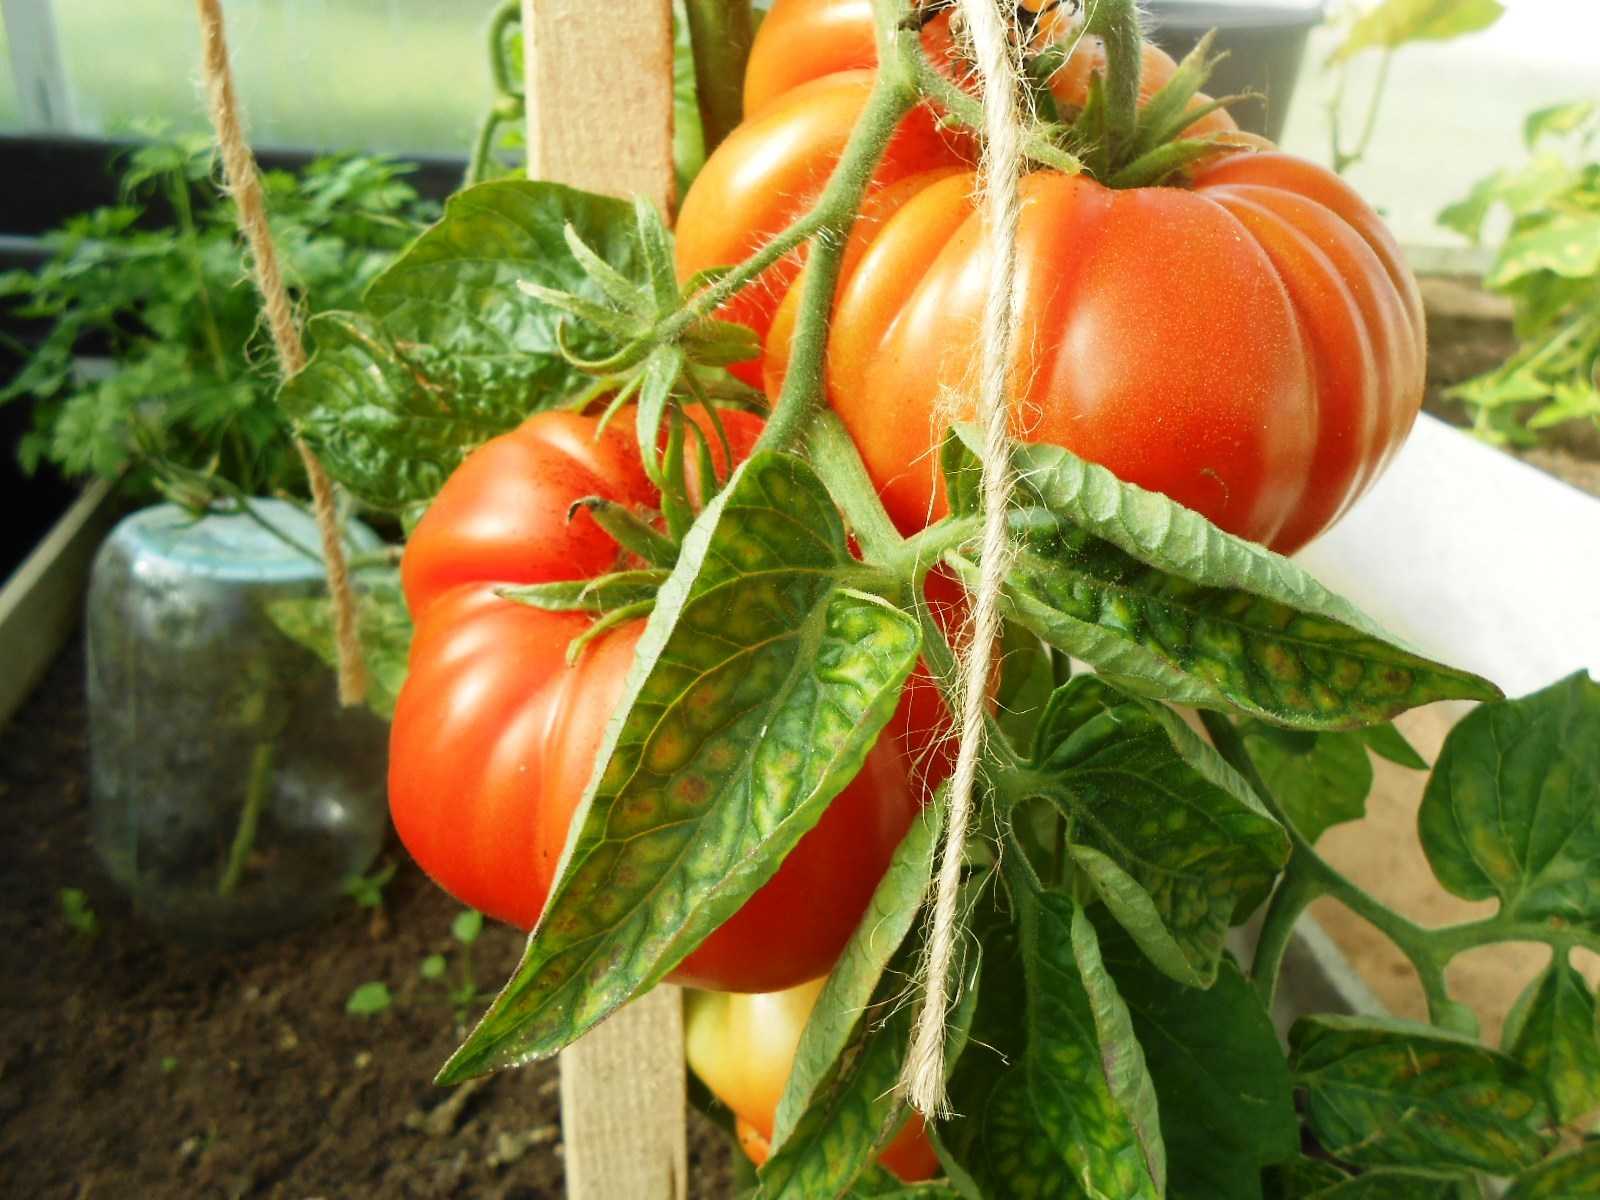 Семена томат Алтайский шедевр